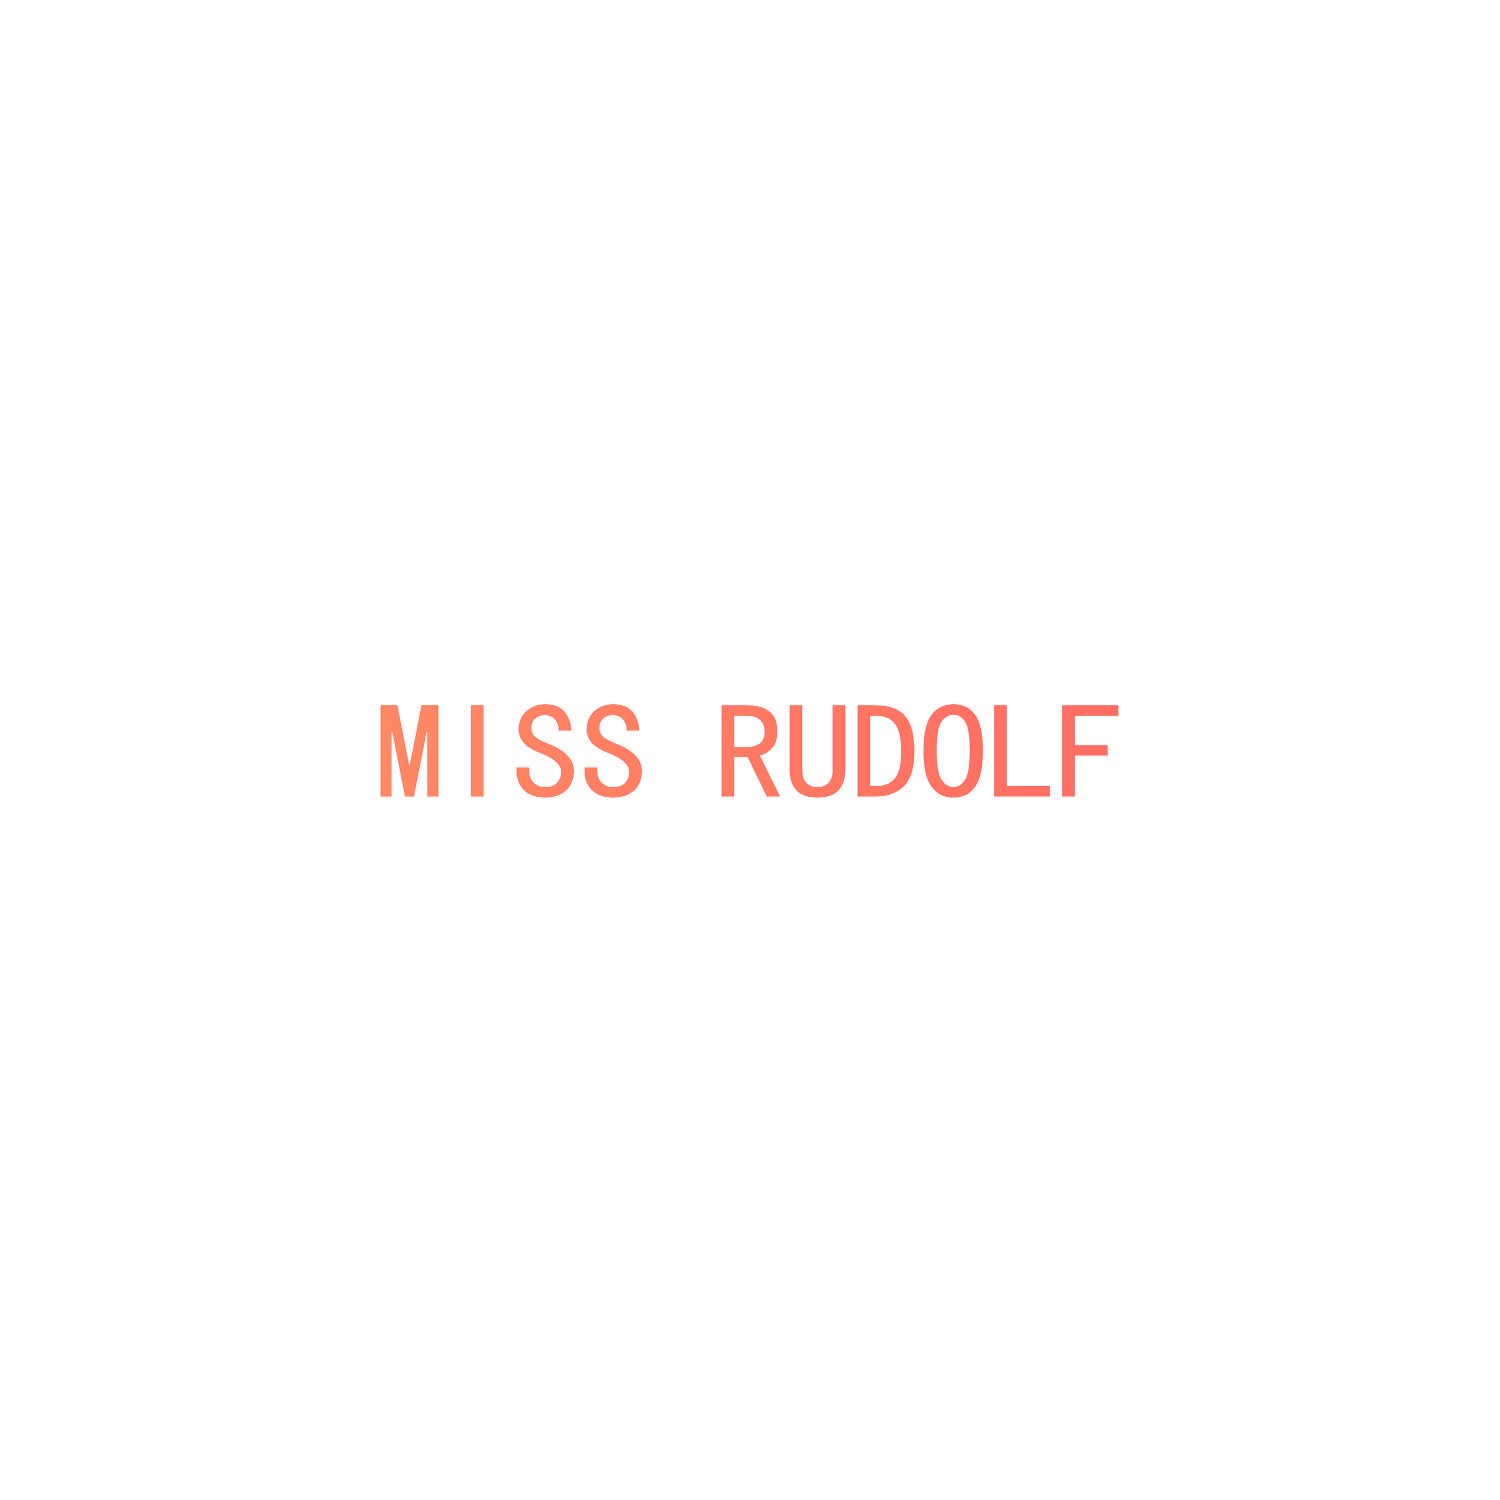 MISS RUDOLF